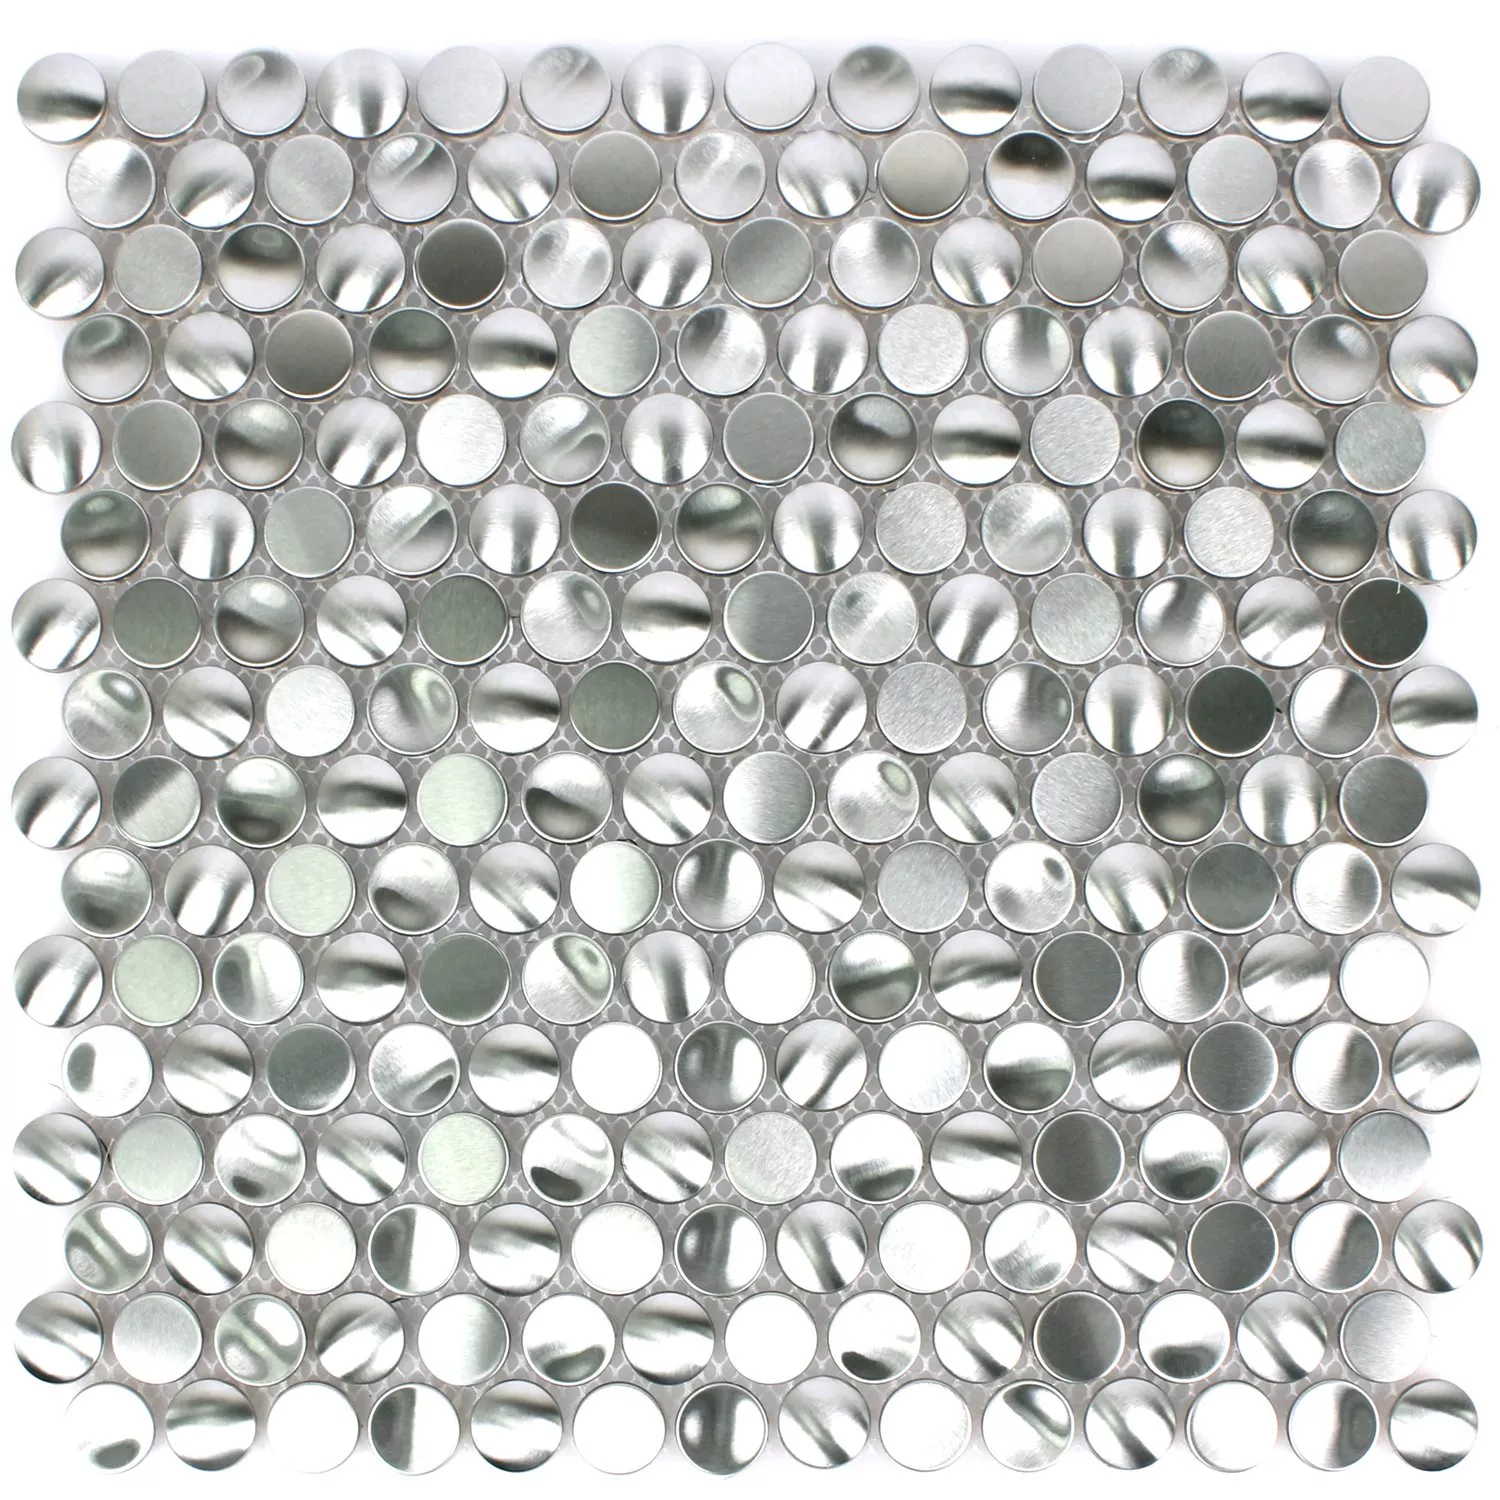 Sample Mosaic Tiles Stainless Steel Celeus Silver Waved